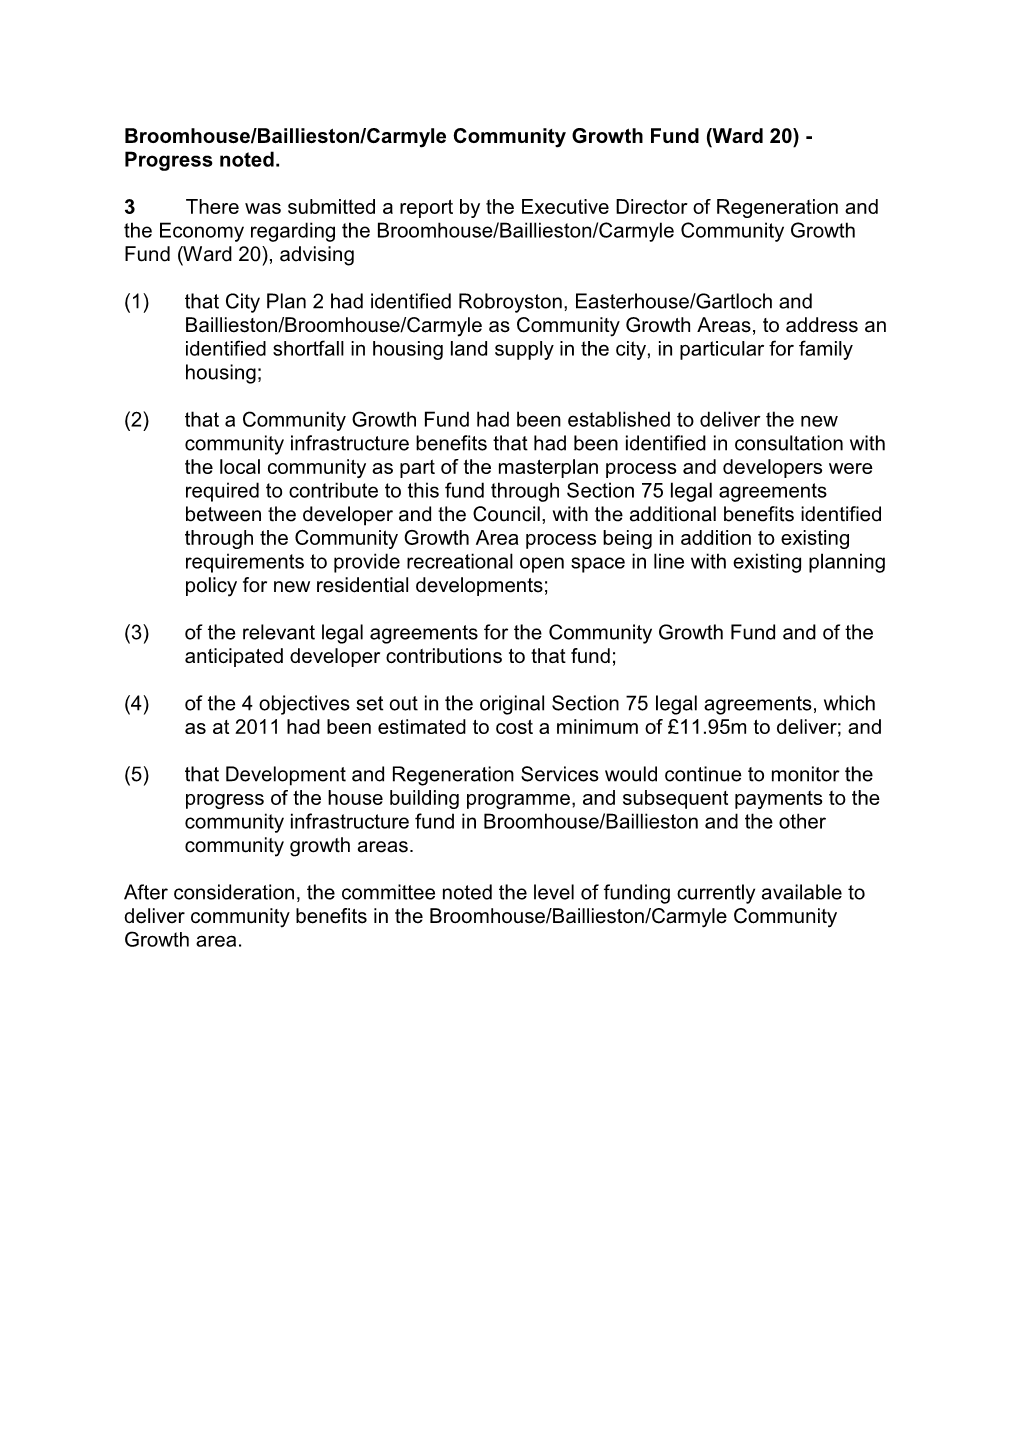 Broomhouse/Baillieston/Carmyle Community Growth Fund (Ward 20) - Progress Noted